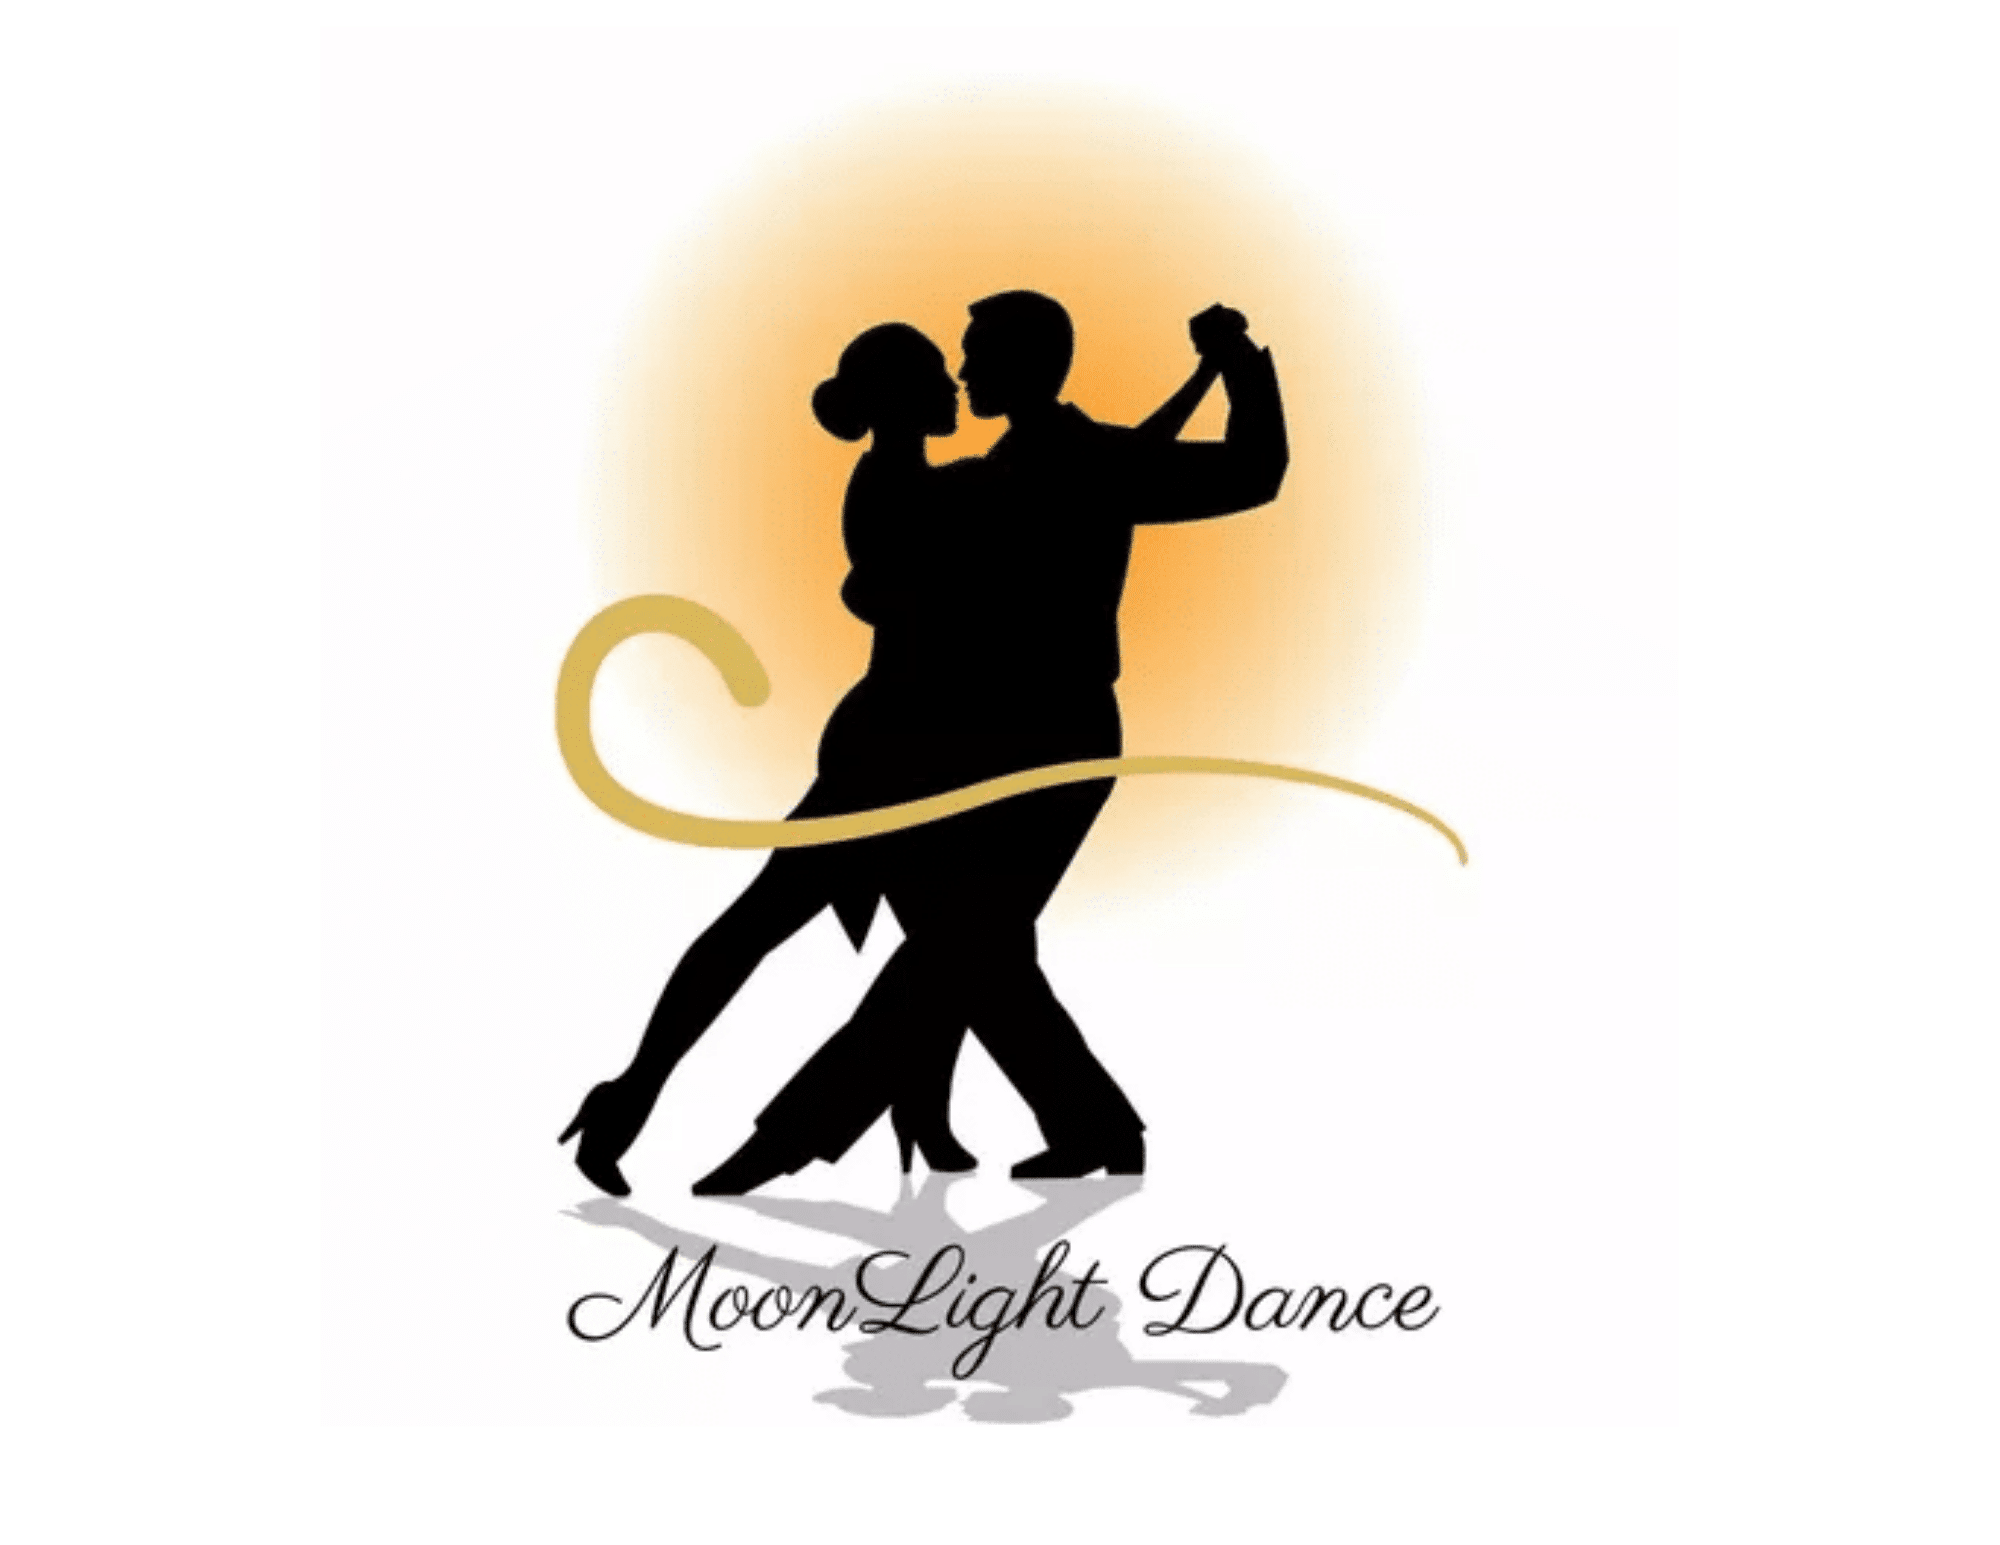 moonlight dance logo feature image